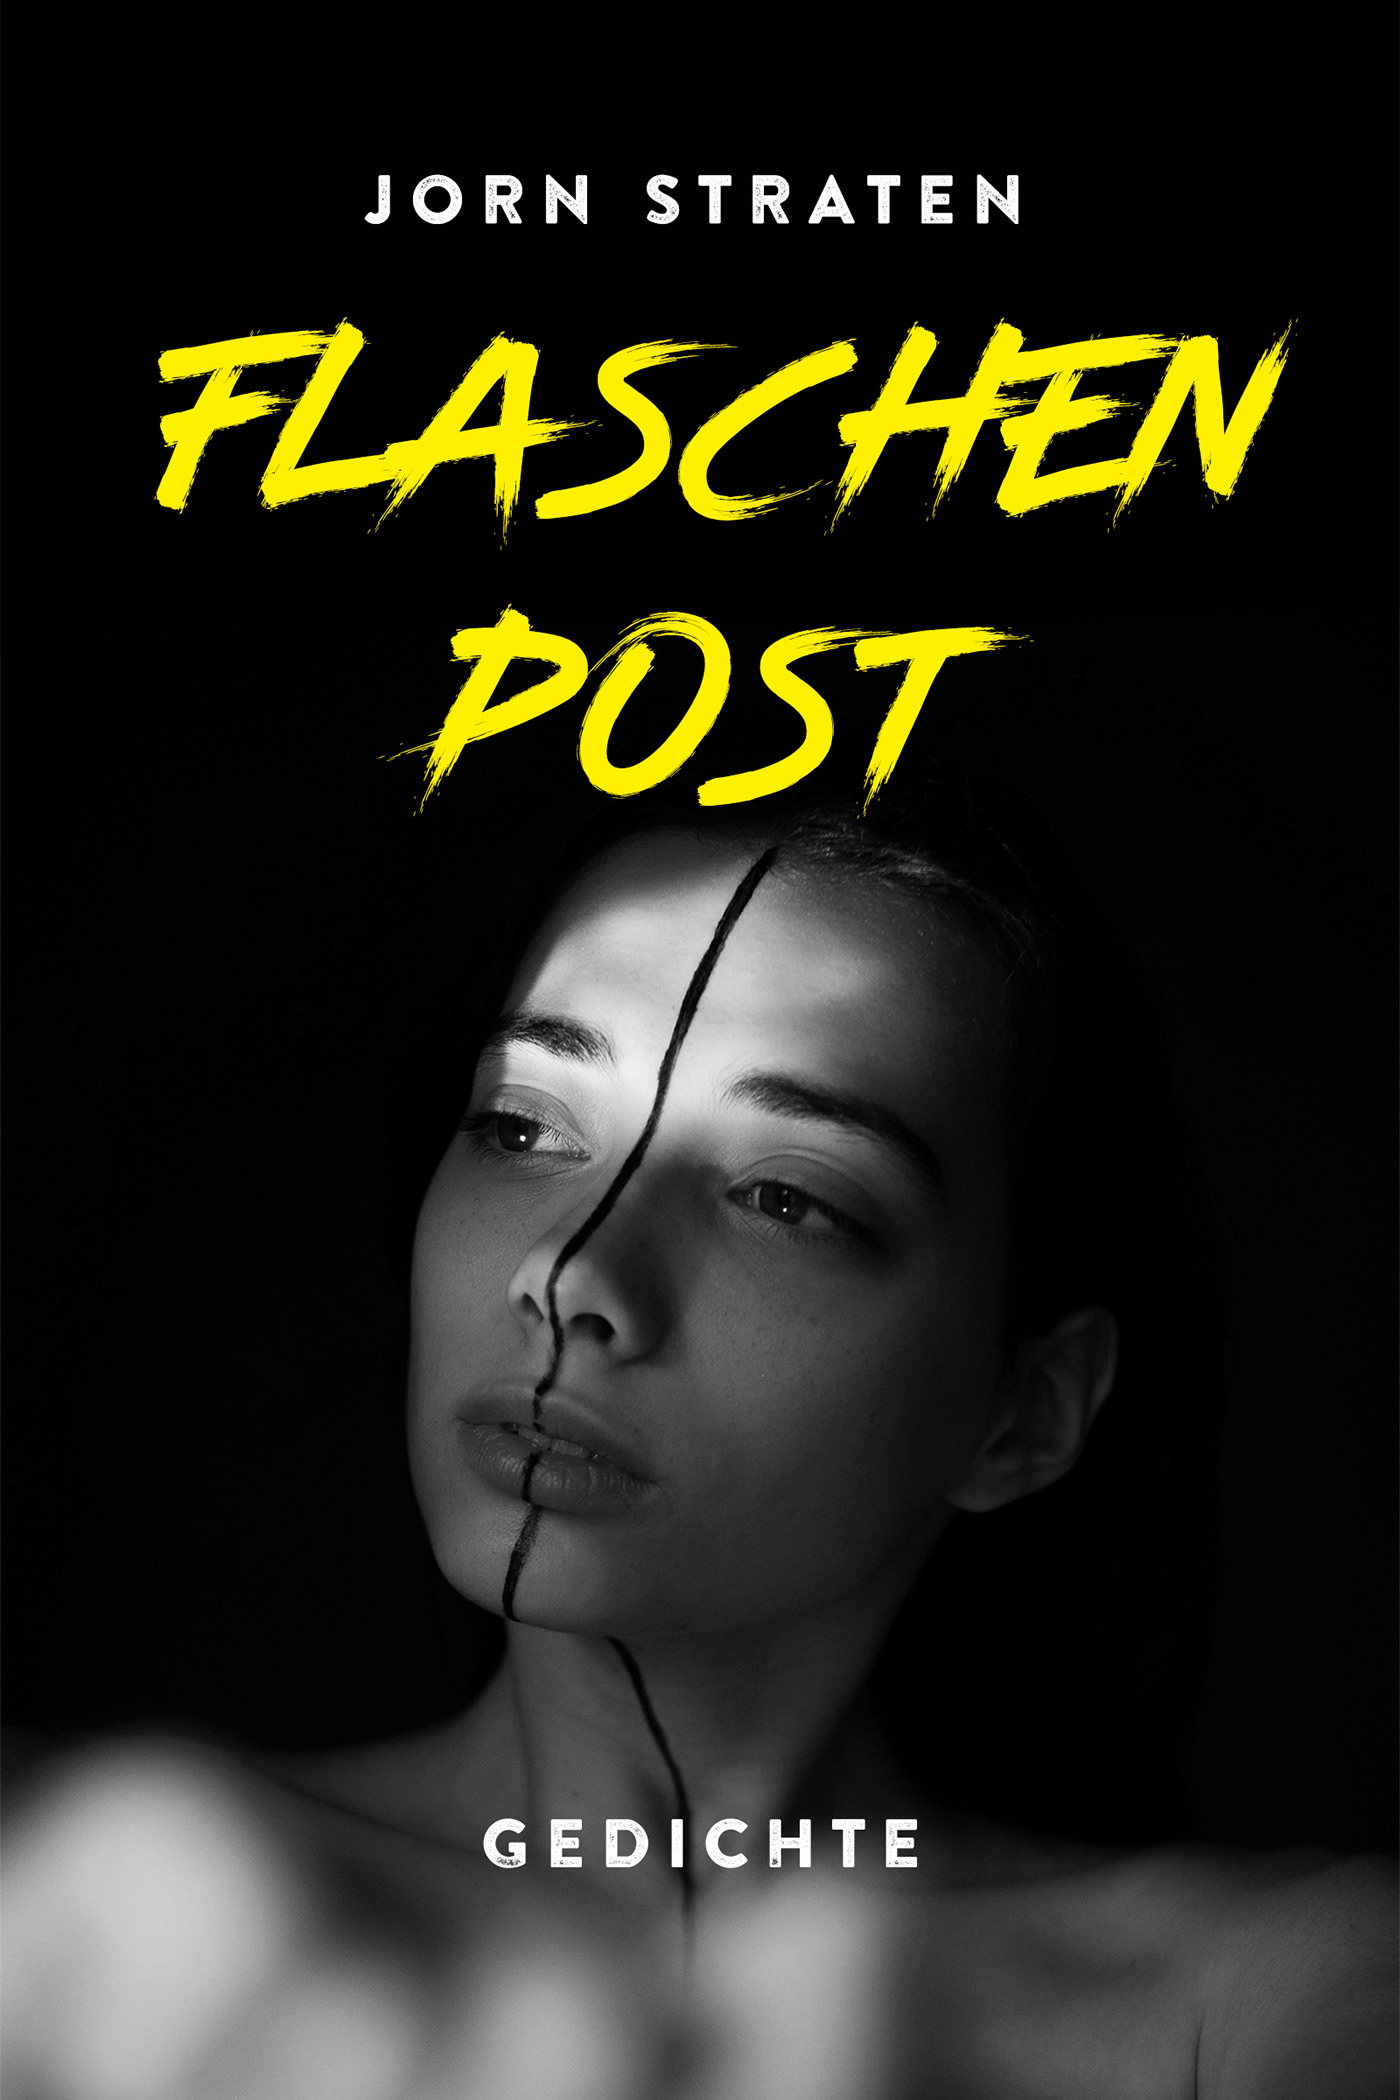 ebook Poetry  Gedichte eBooks downloads poems Flaschenpost